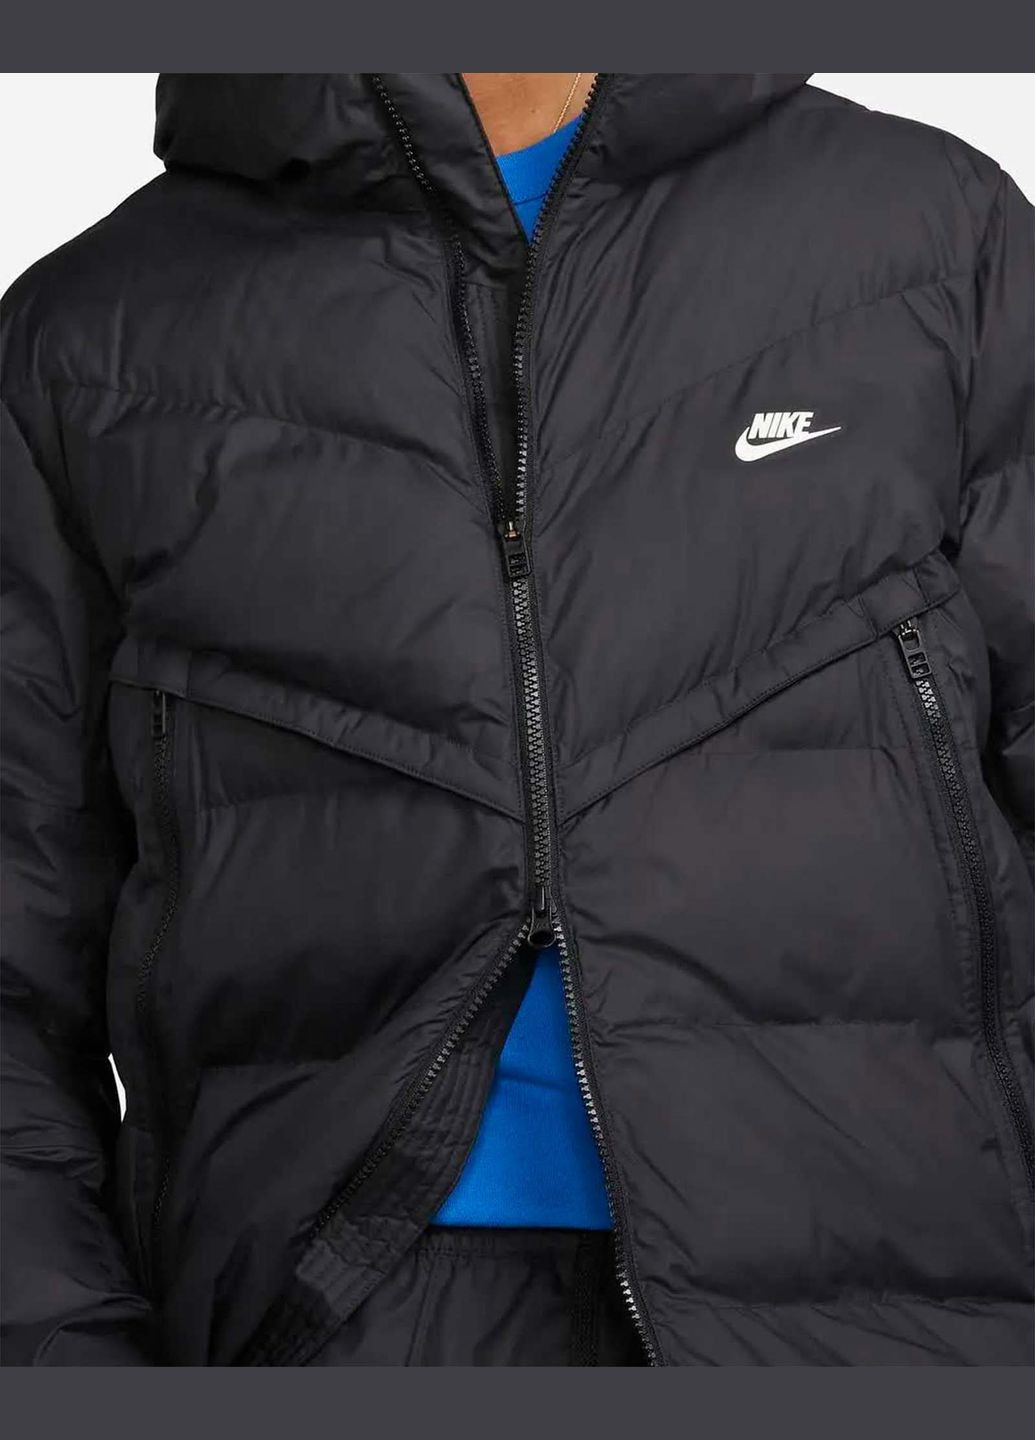 Чорна демісезонна курткапарка чоловіча storm-fit windrunner primaloft parka dr9609-010 зима чорна Nike